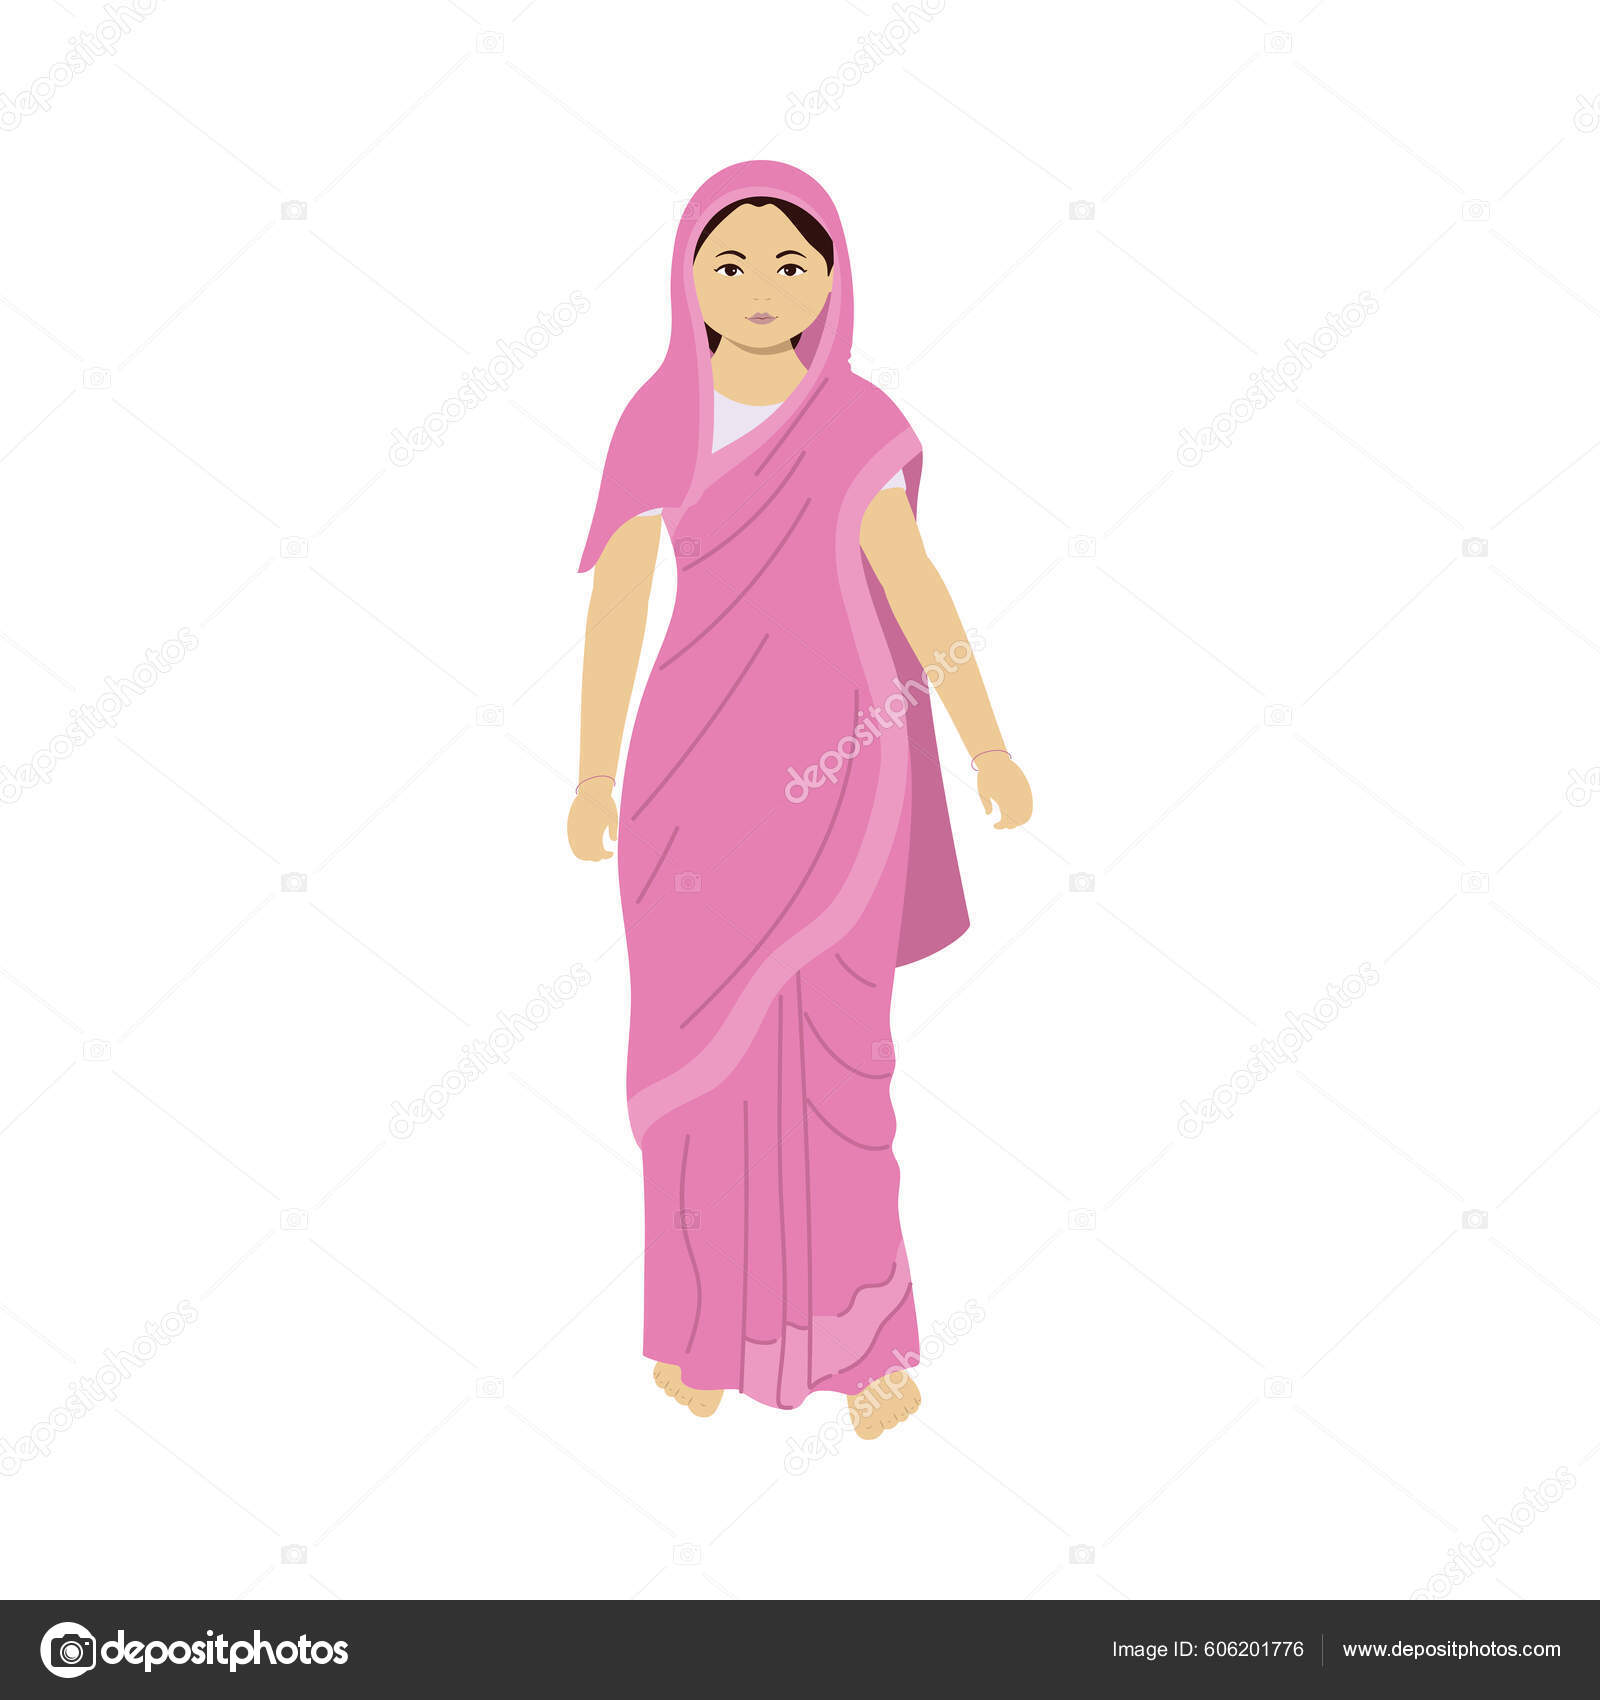 Character Indian Woman Wearing Pink Saree Standing Pose White Background  vetor(es) de stock de ©alliesinteract 606201776